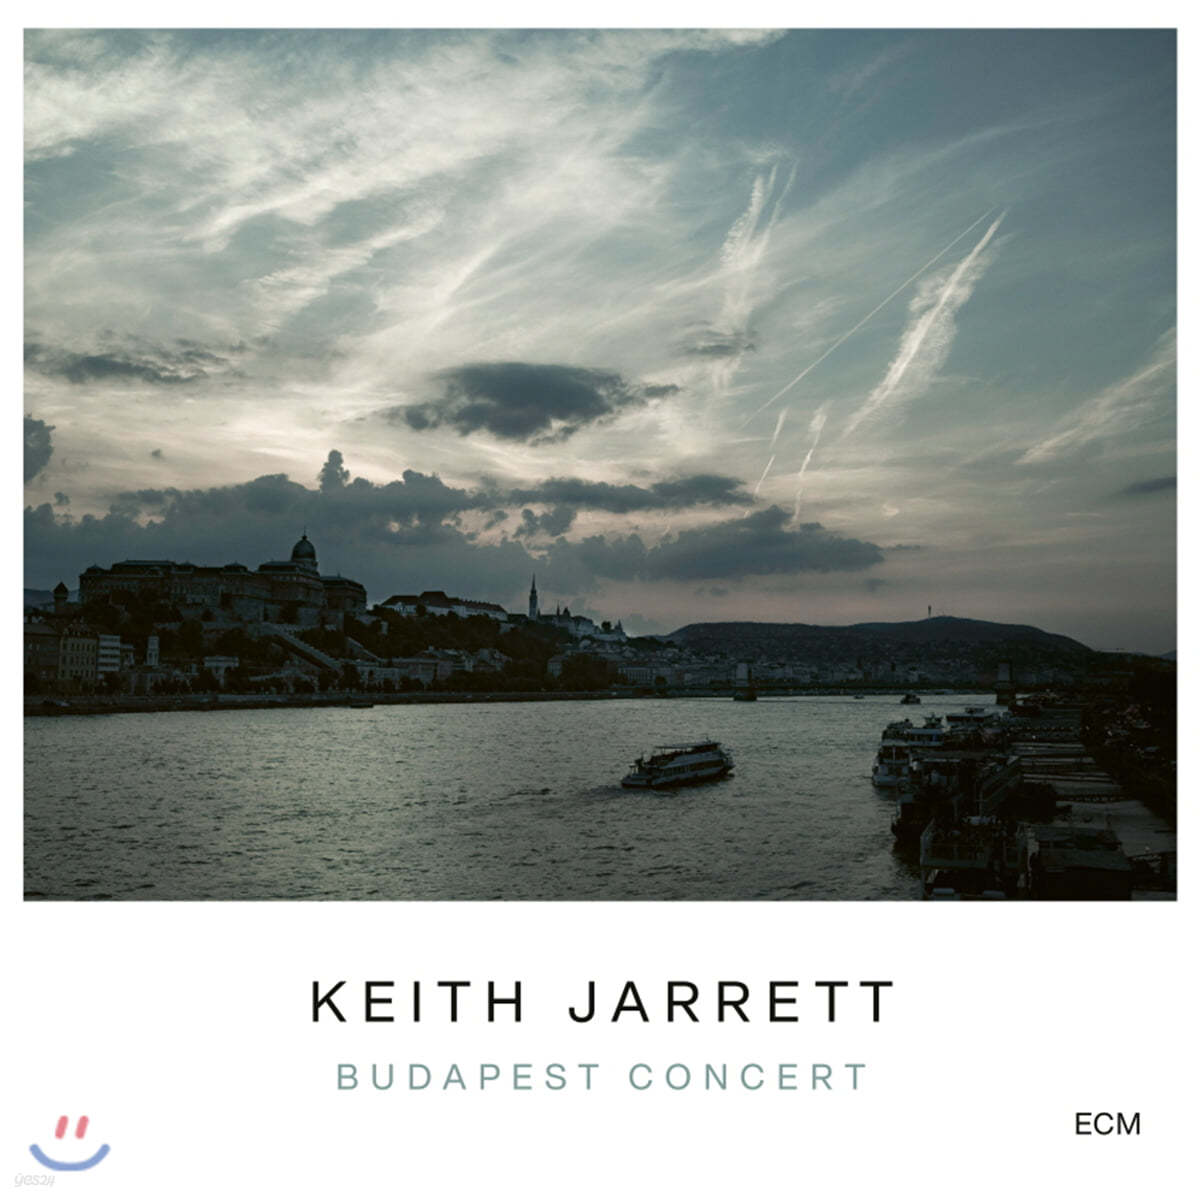 Keith Jarrett - Budapest Concert 키스 자렛 2016년 헝가리 부다페스트 콘서트 [2LP]